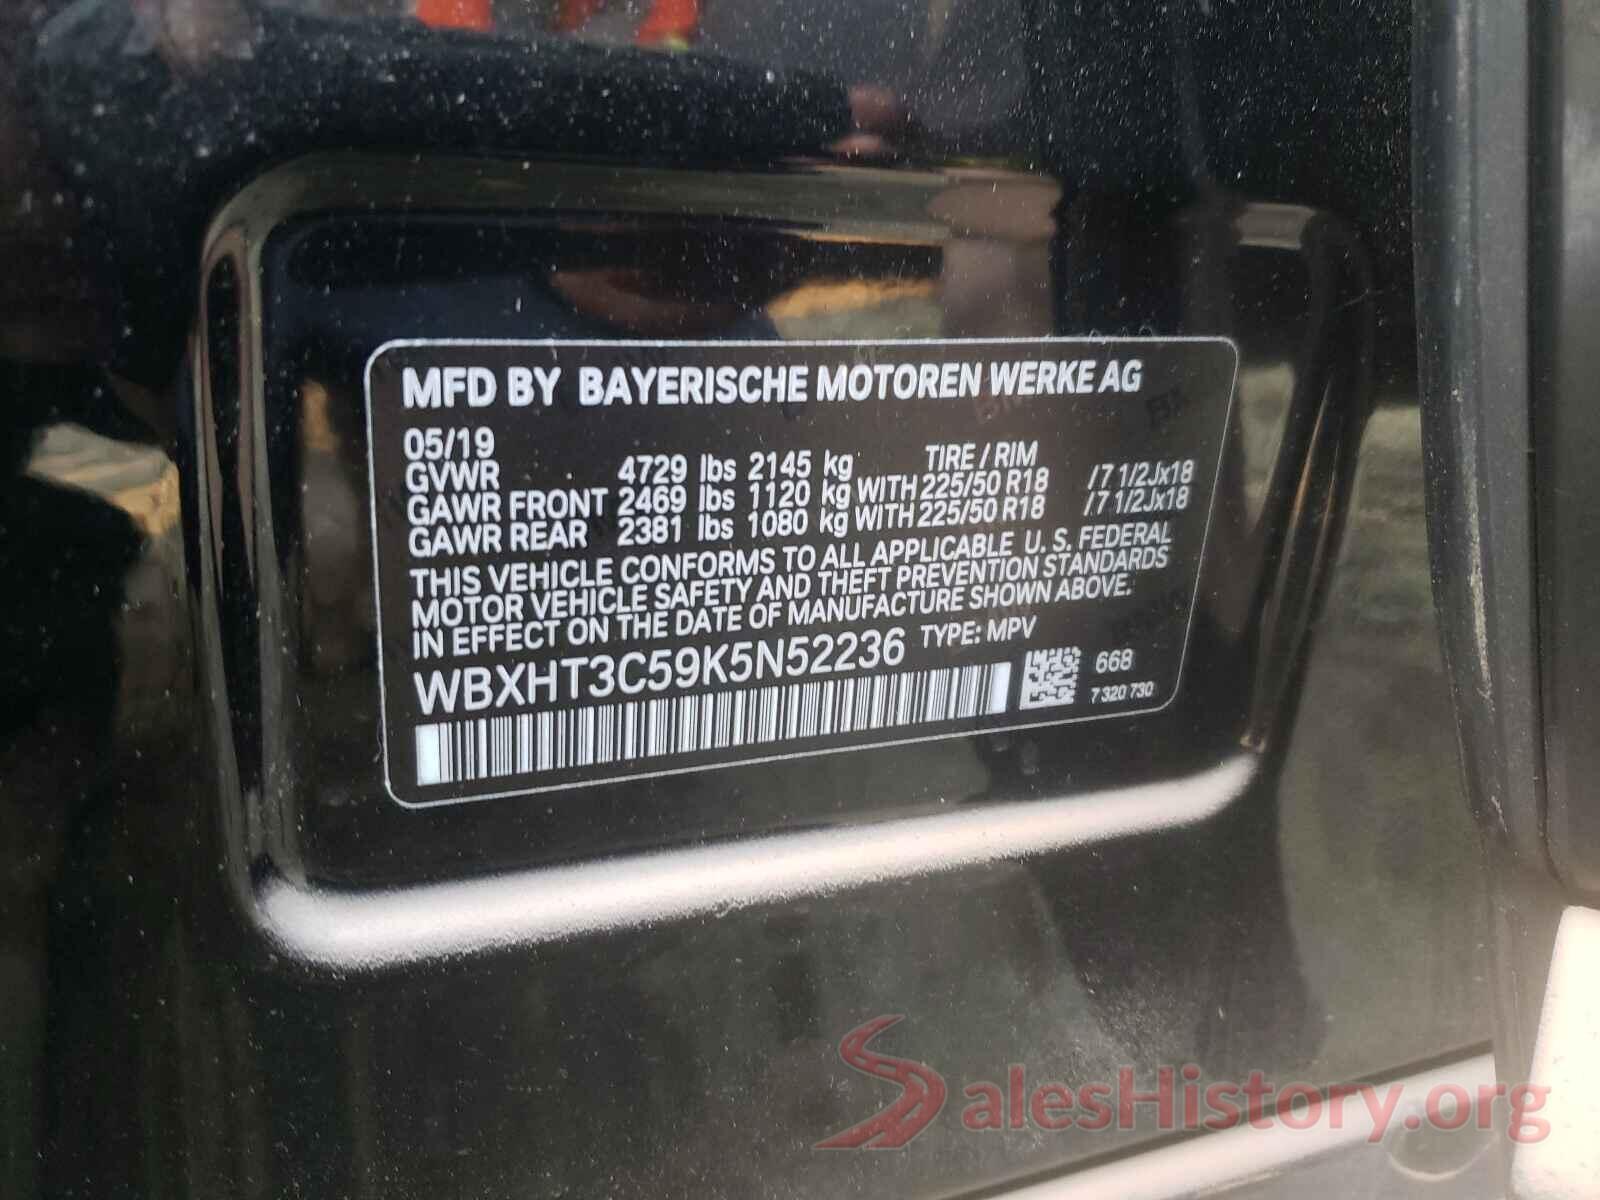 WBXHT3C59K5N52236 2019 BMW X1